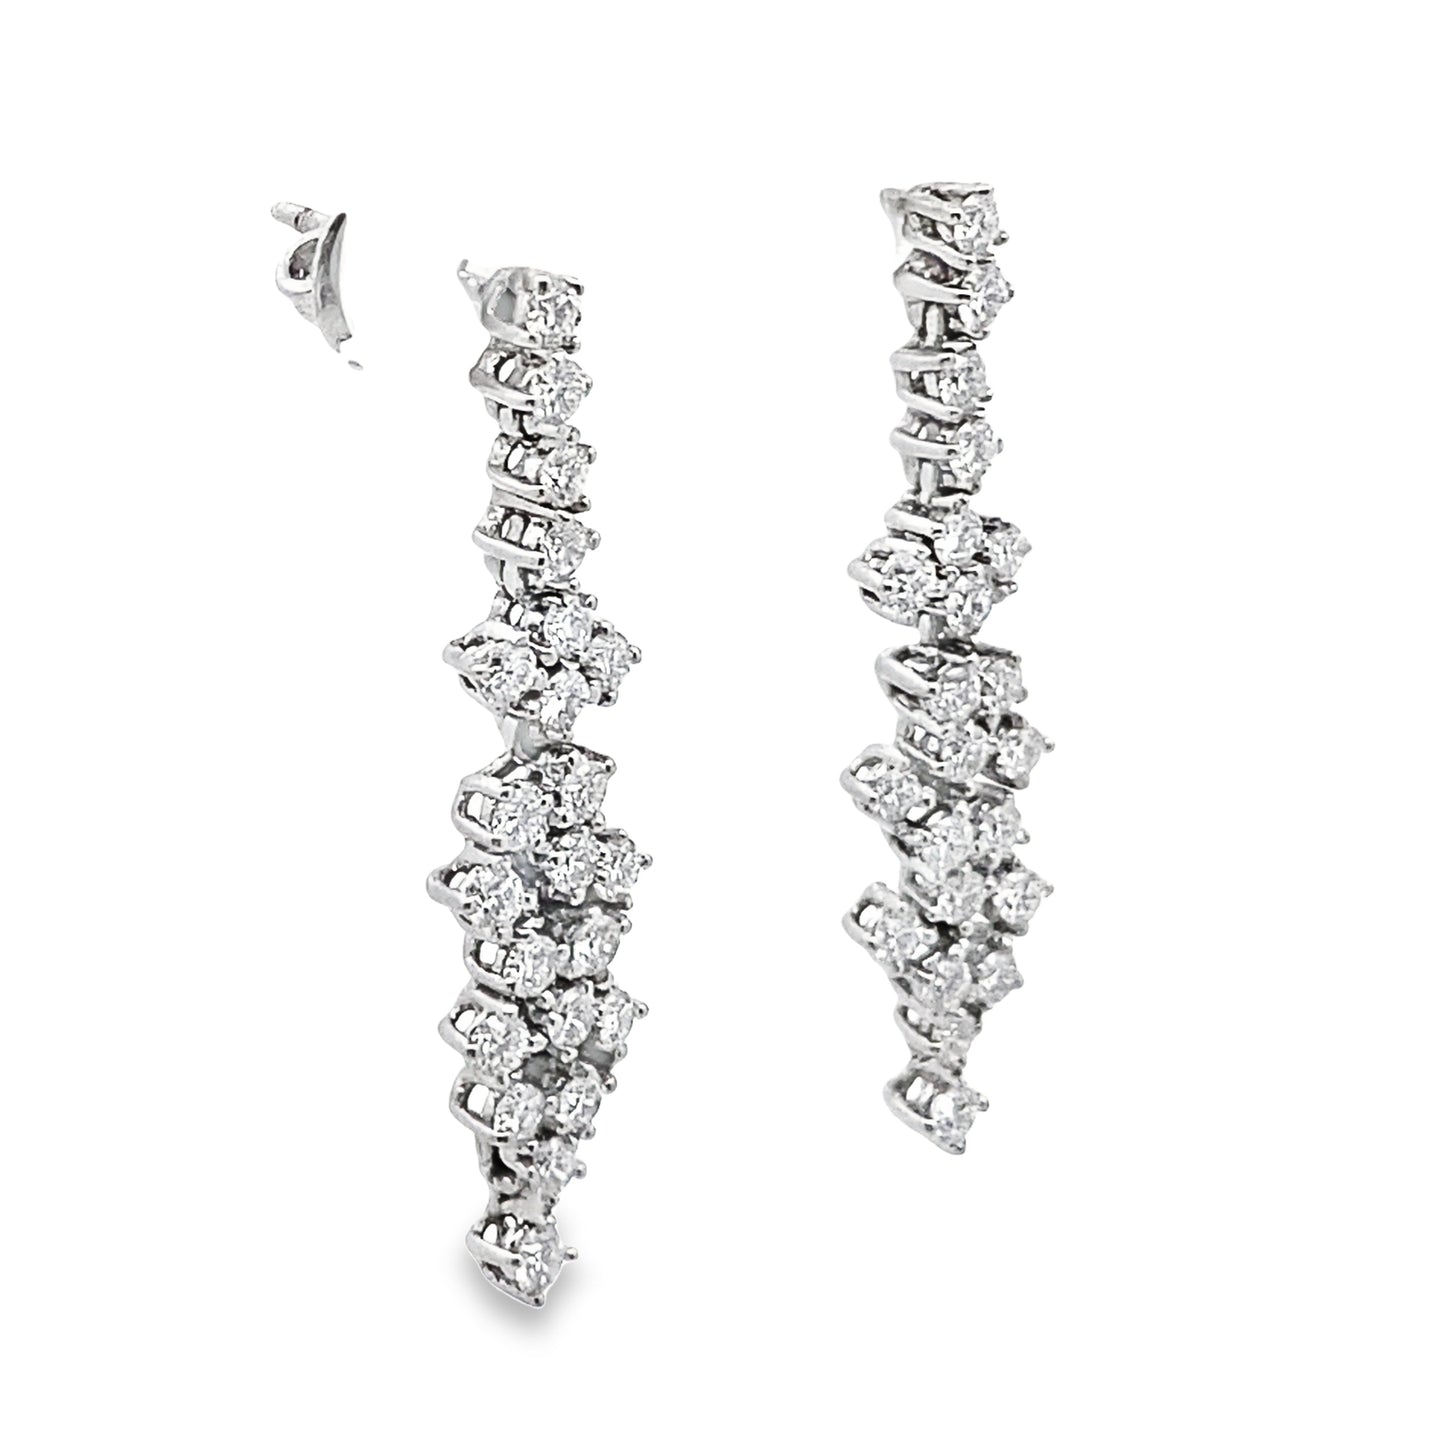 Dangly Diamond Statement Earrings in 14K White Gold